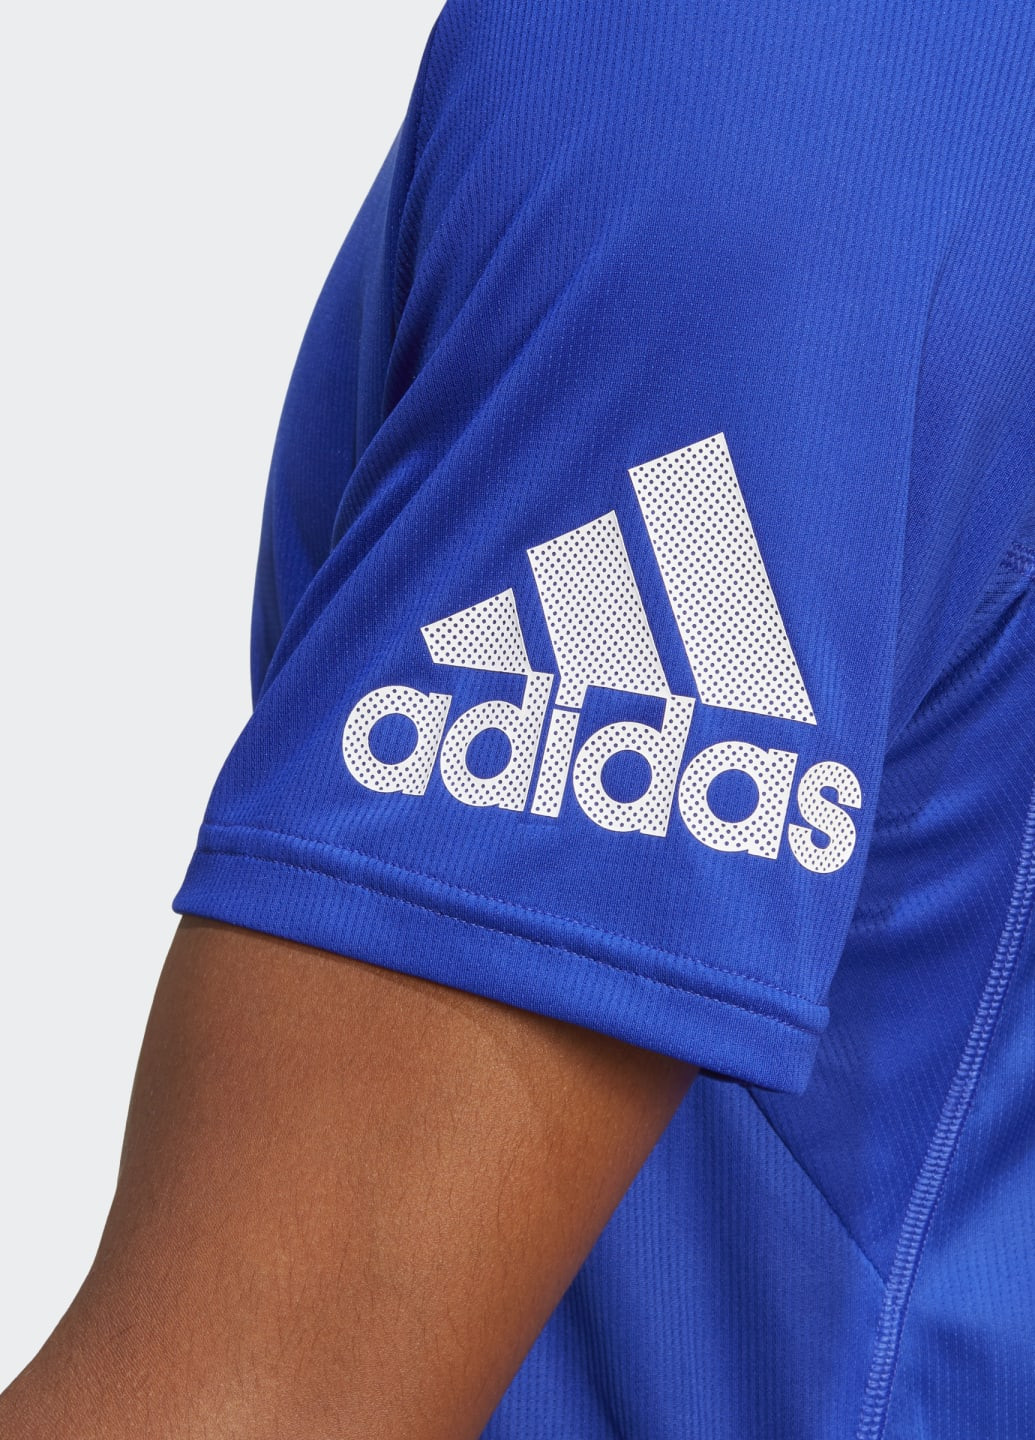 Синяя футболка для бега adidas